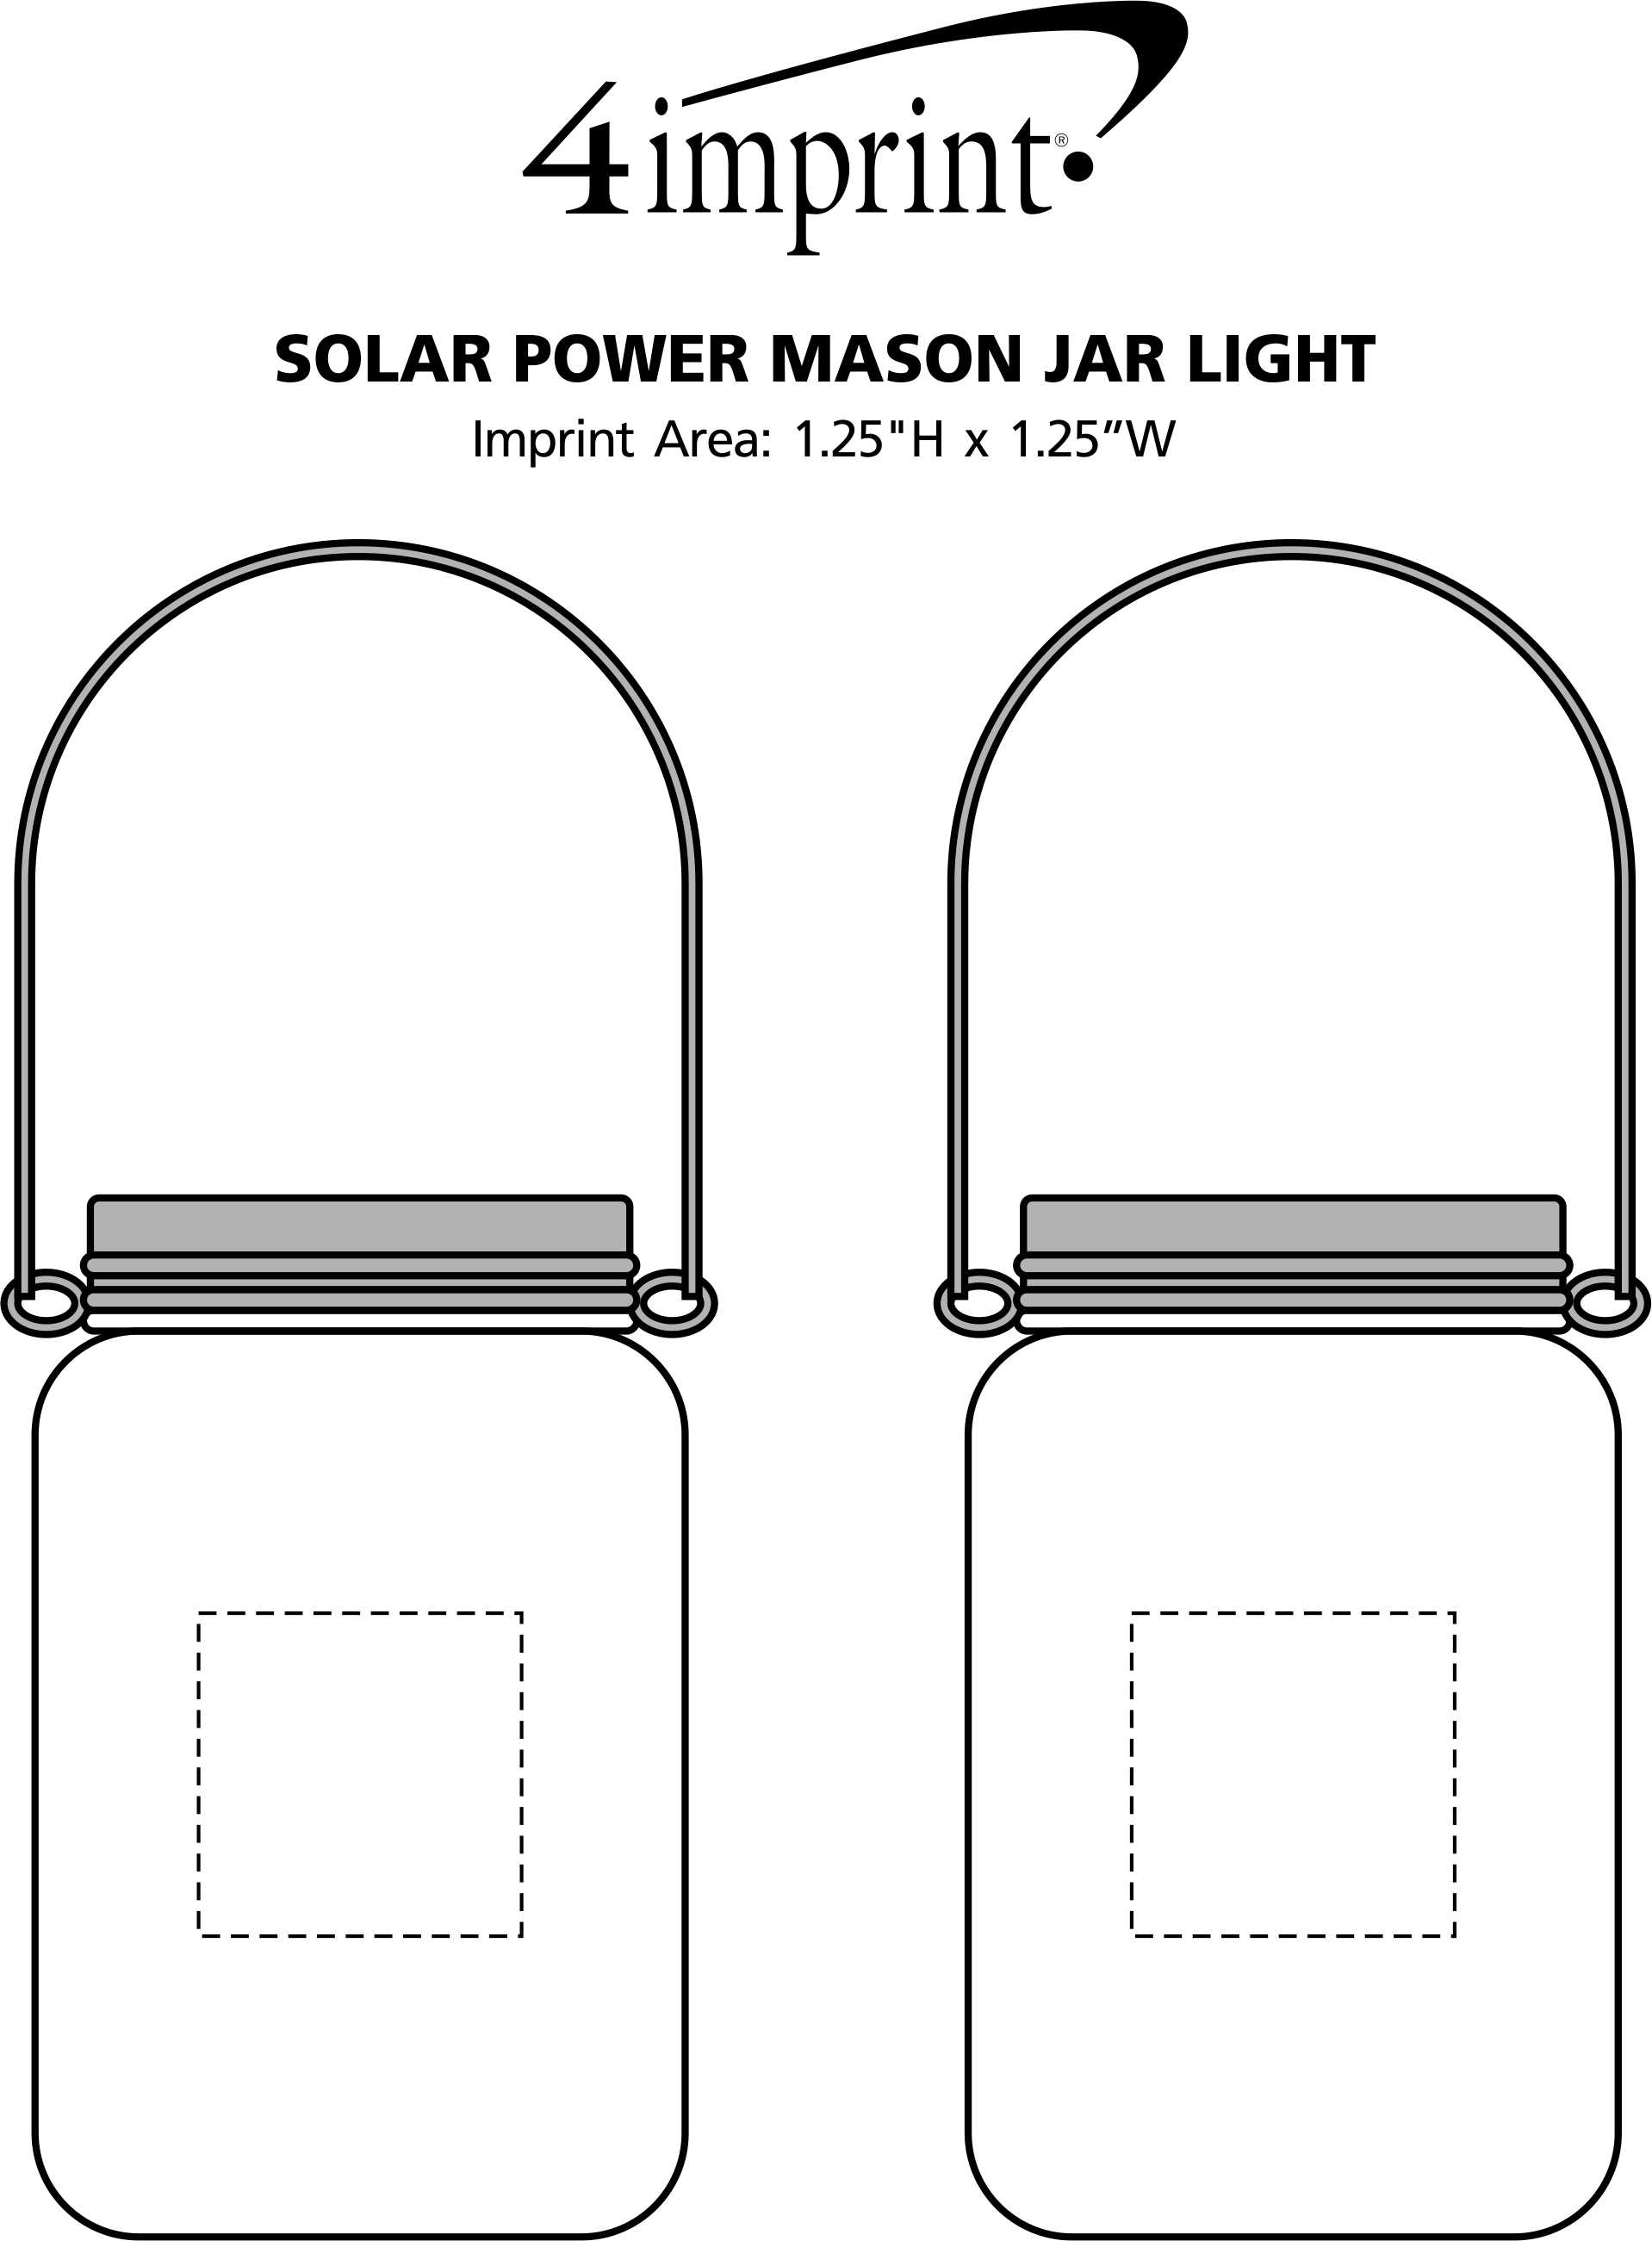 Imprint Area of Solar Power Mason Jar Light